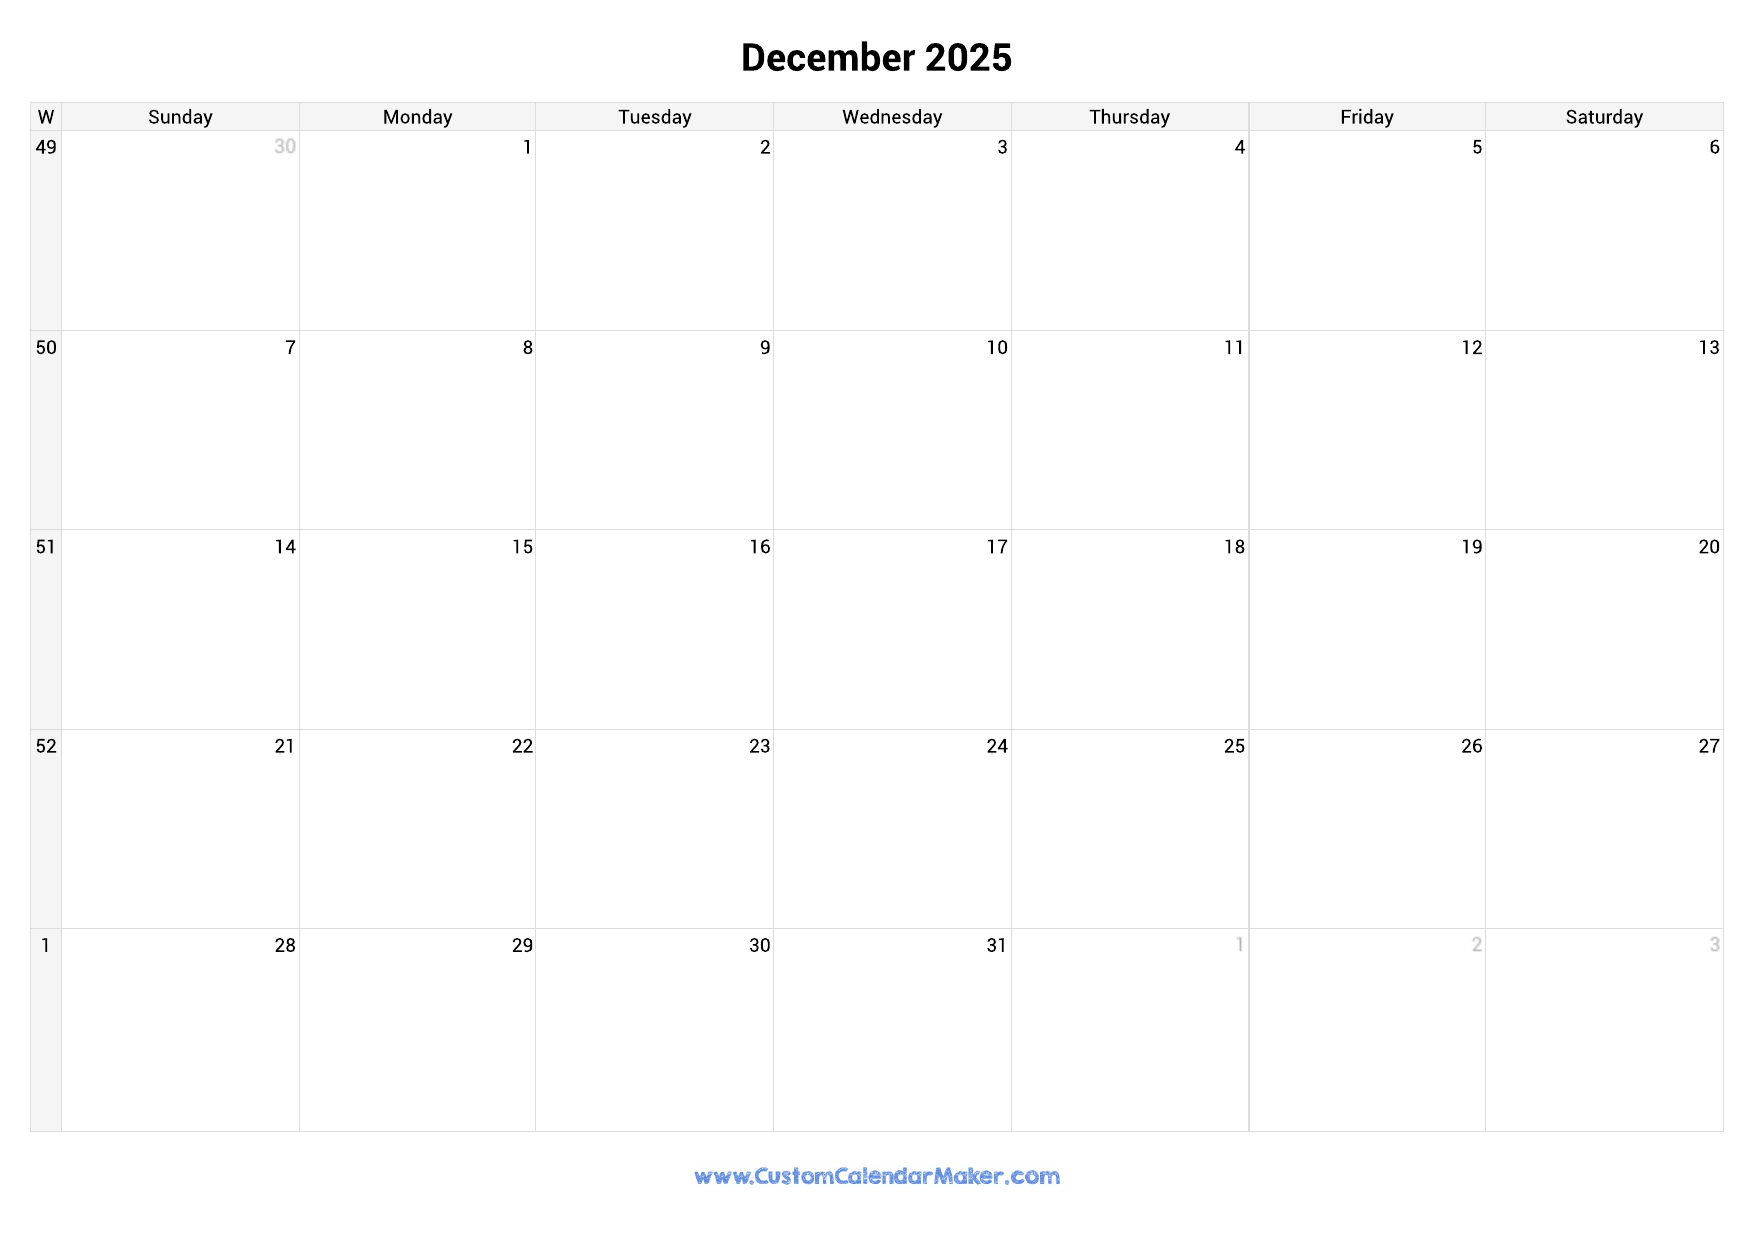 january-2025-calendar-template